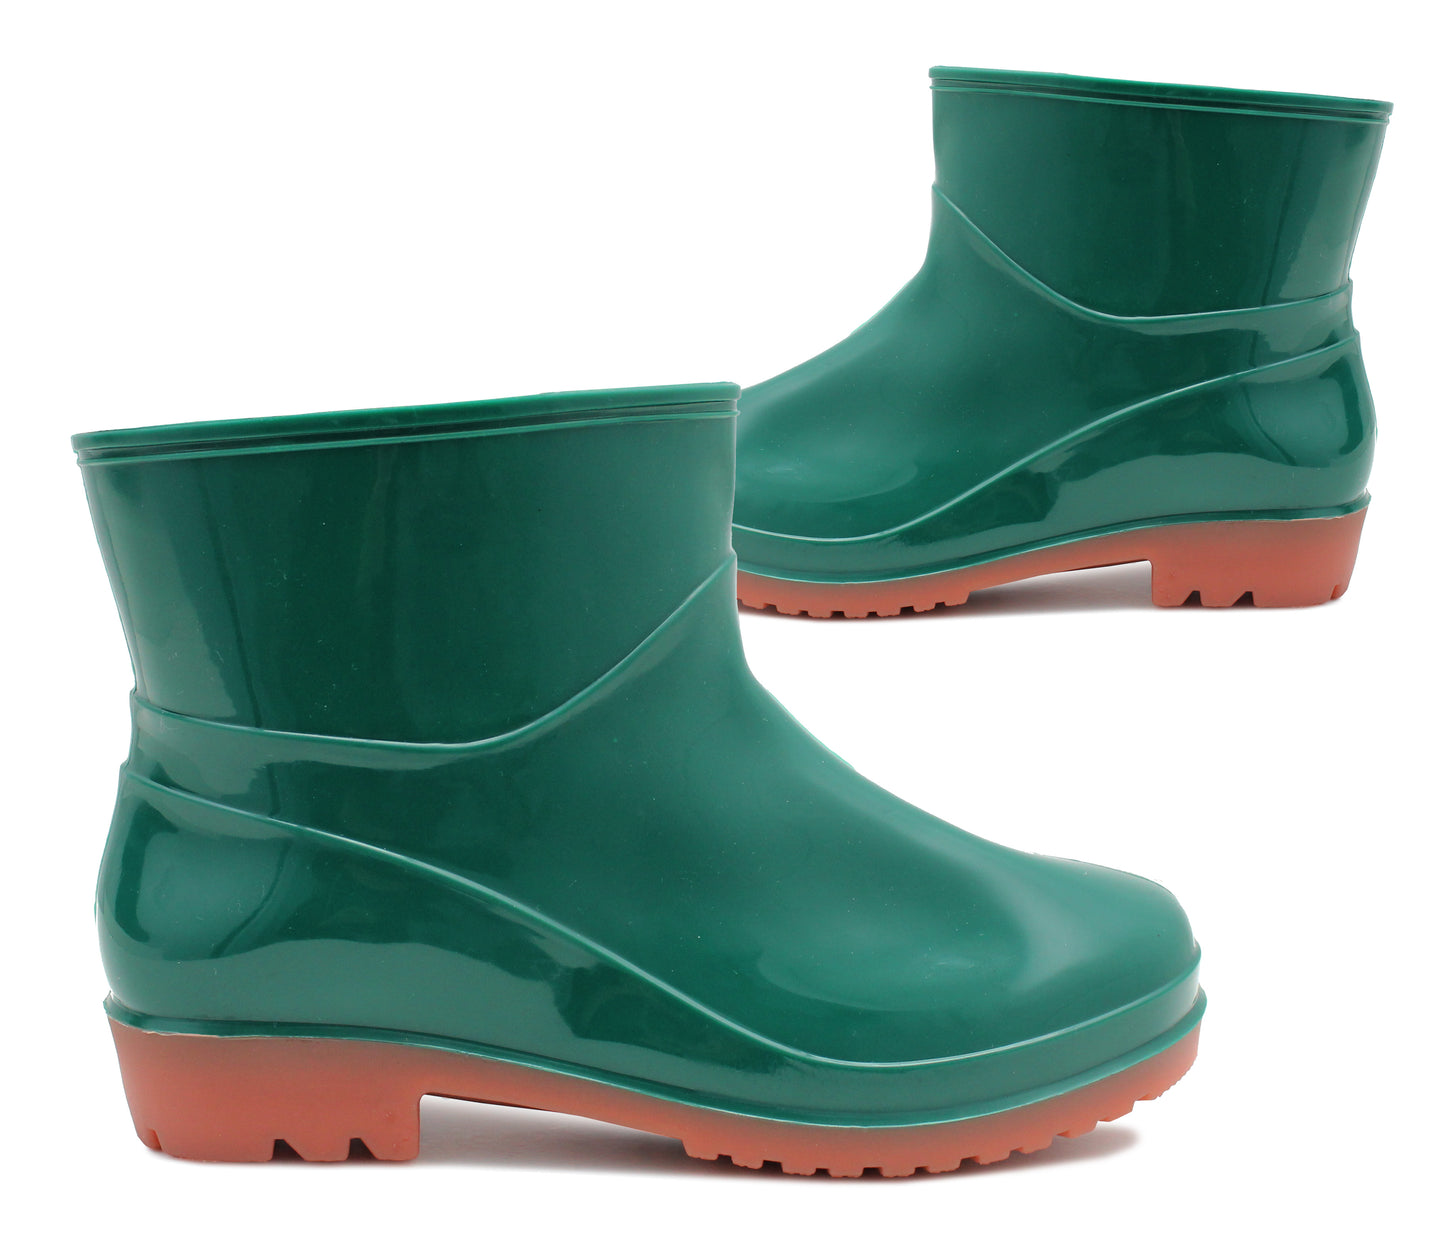 Womens Green Tan Ankle Wellies Short Rain Boot Waterproof Snow Ladies Outdoor Dog Walking Festival Gardening Low Cut Wellington Boots